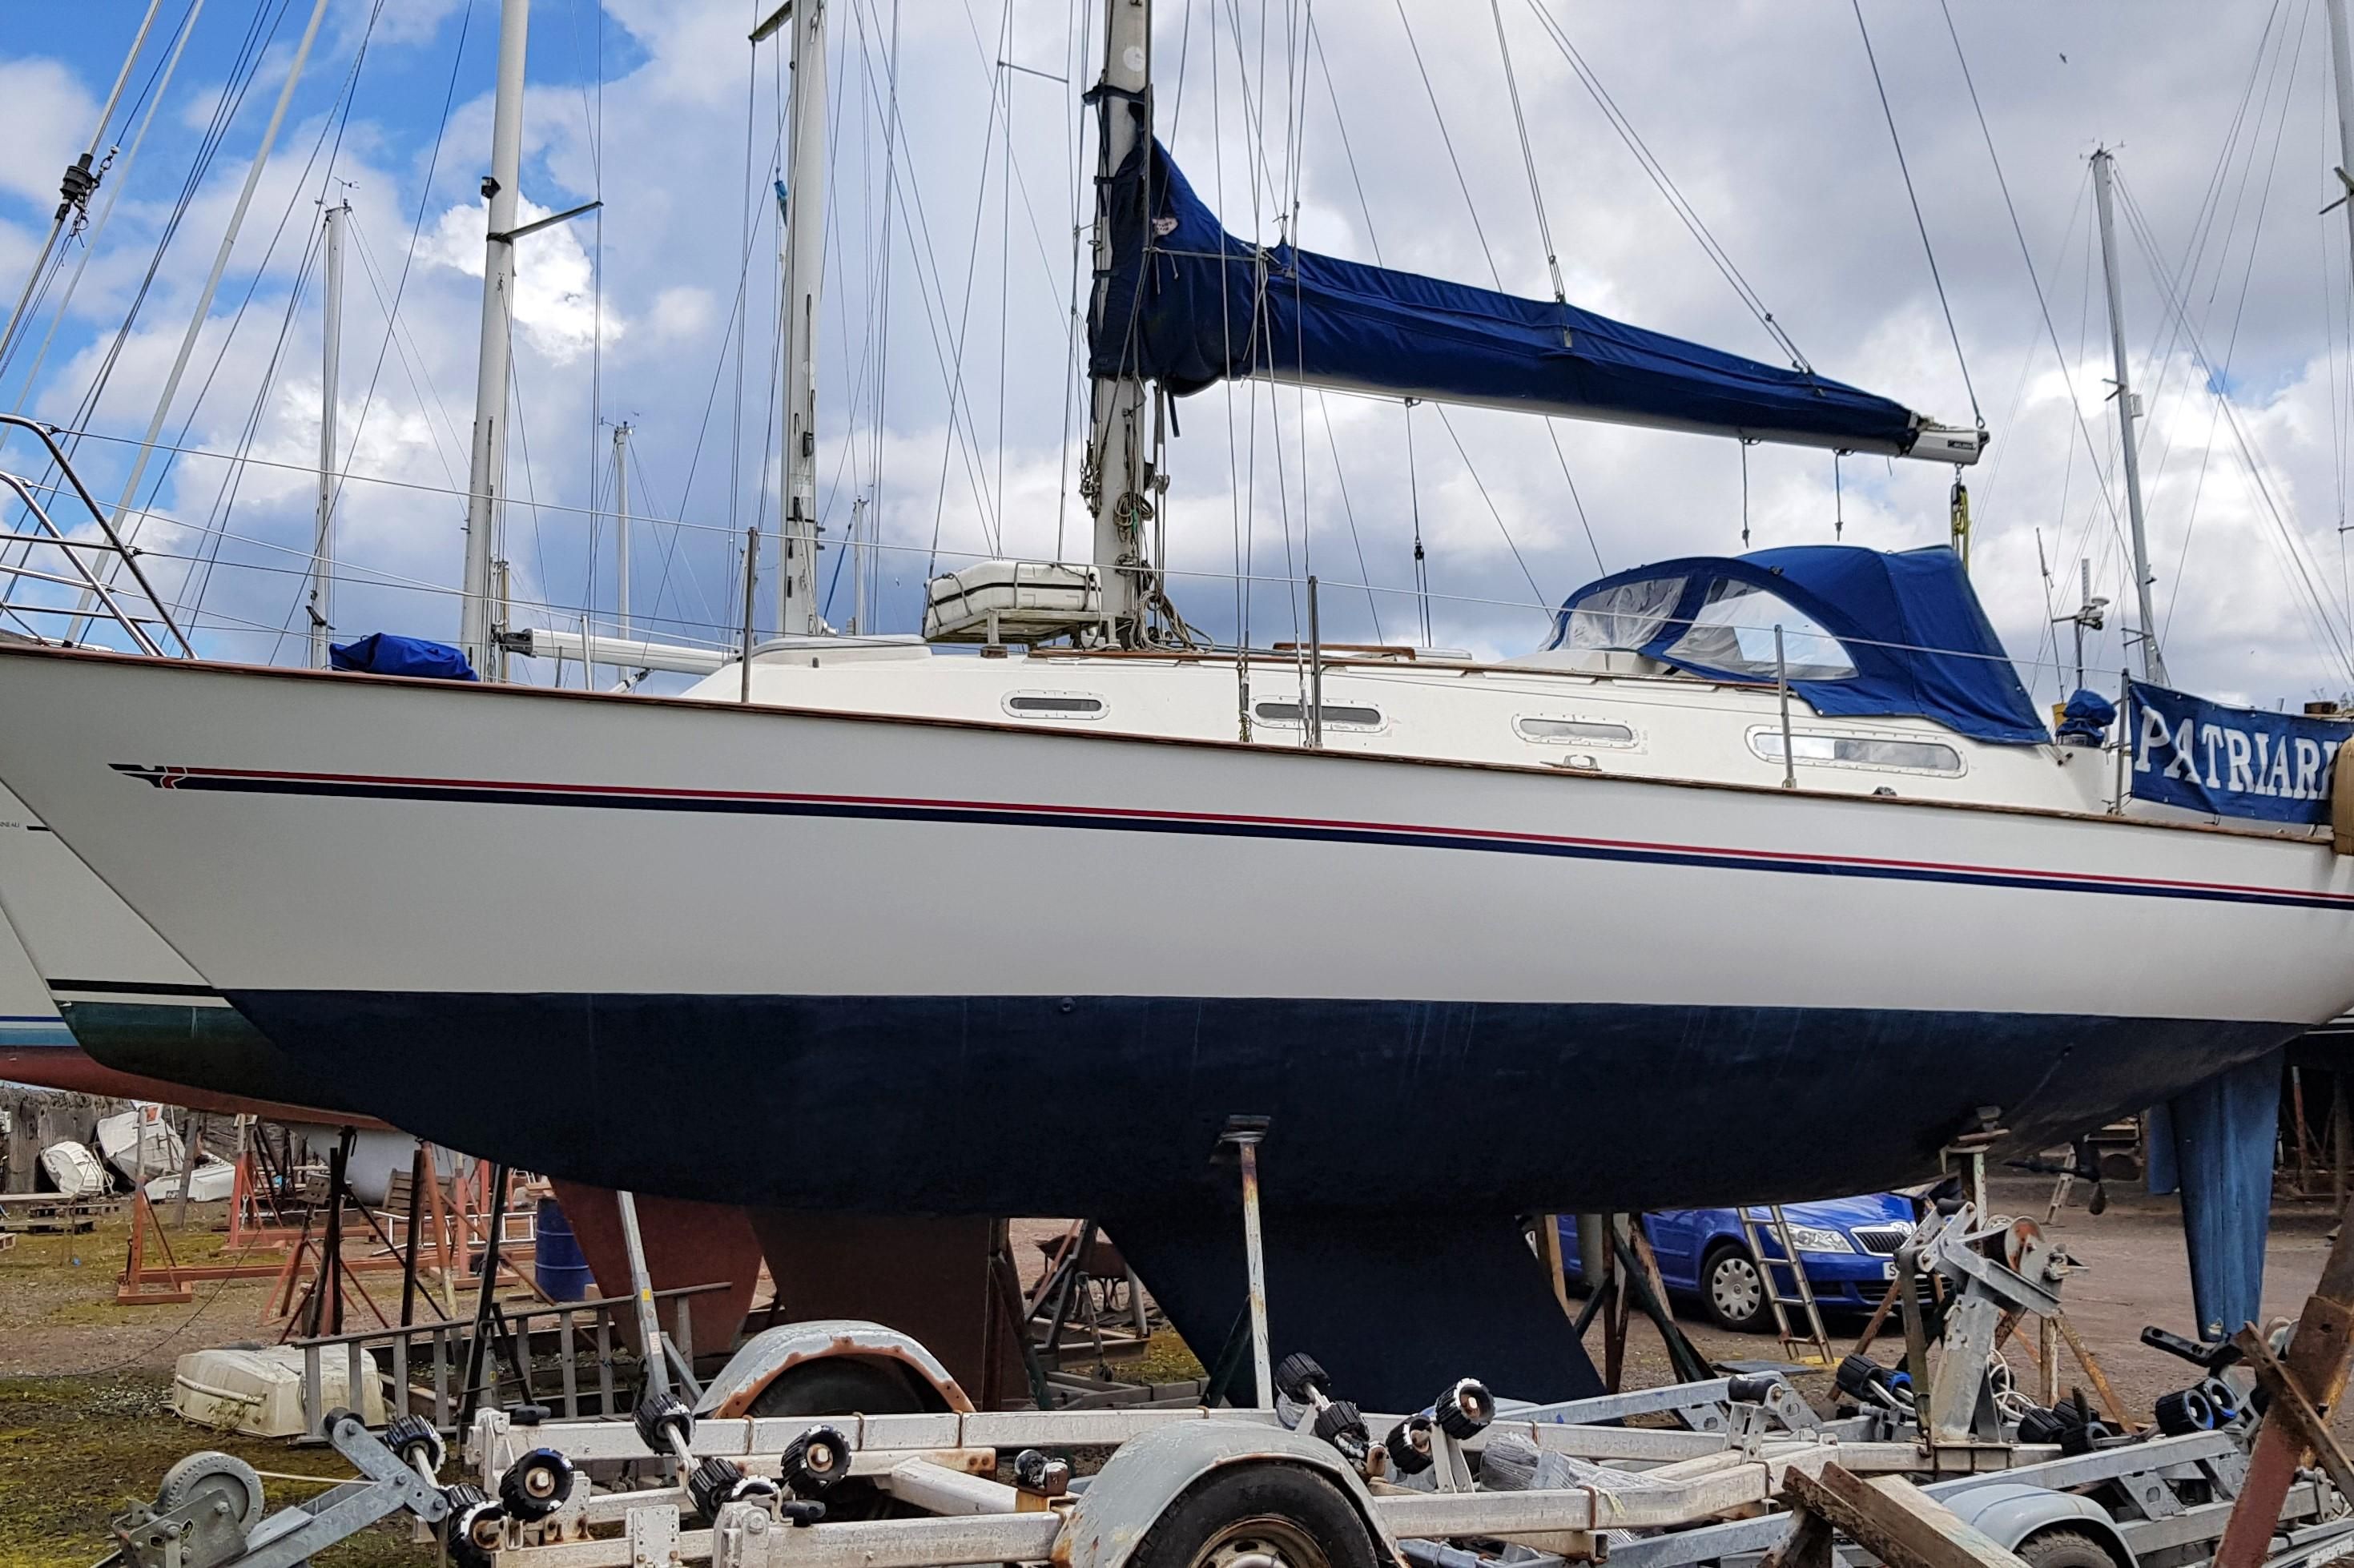 sadler 34 yacht for sale